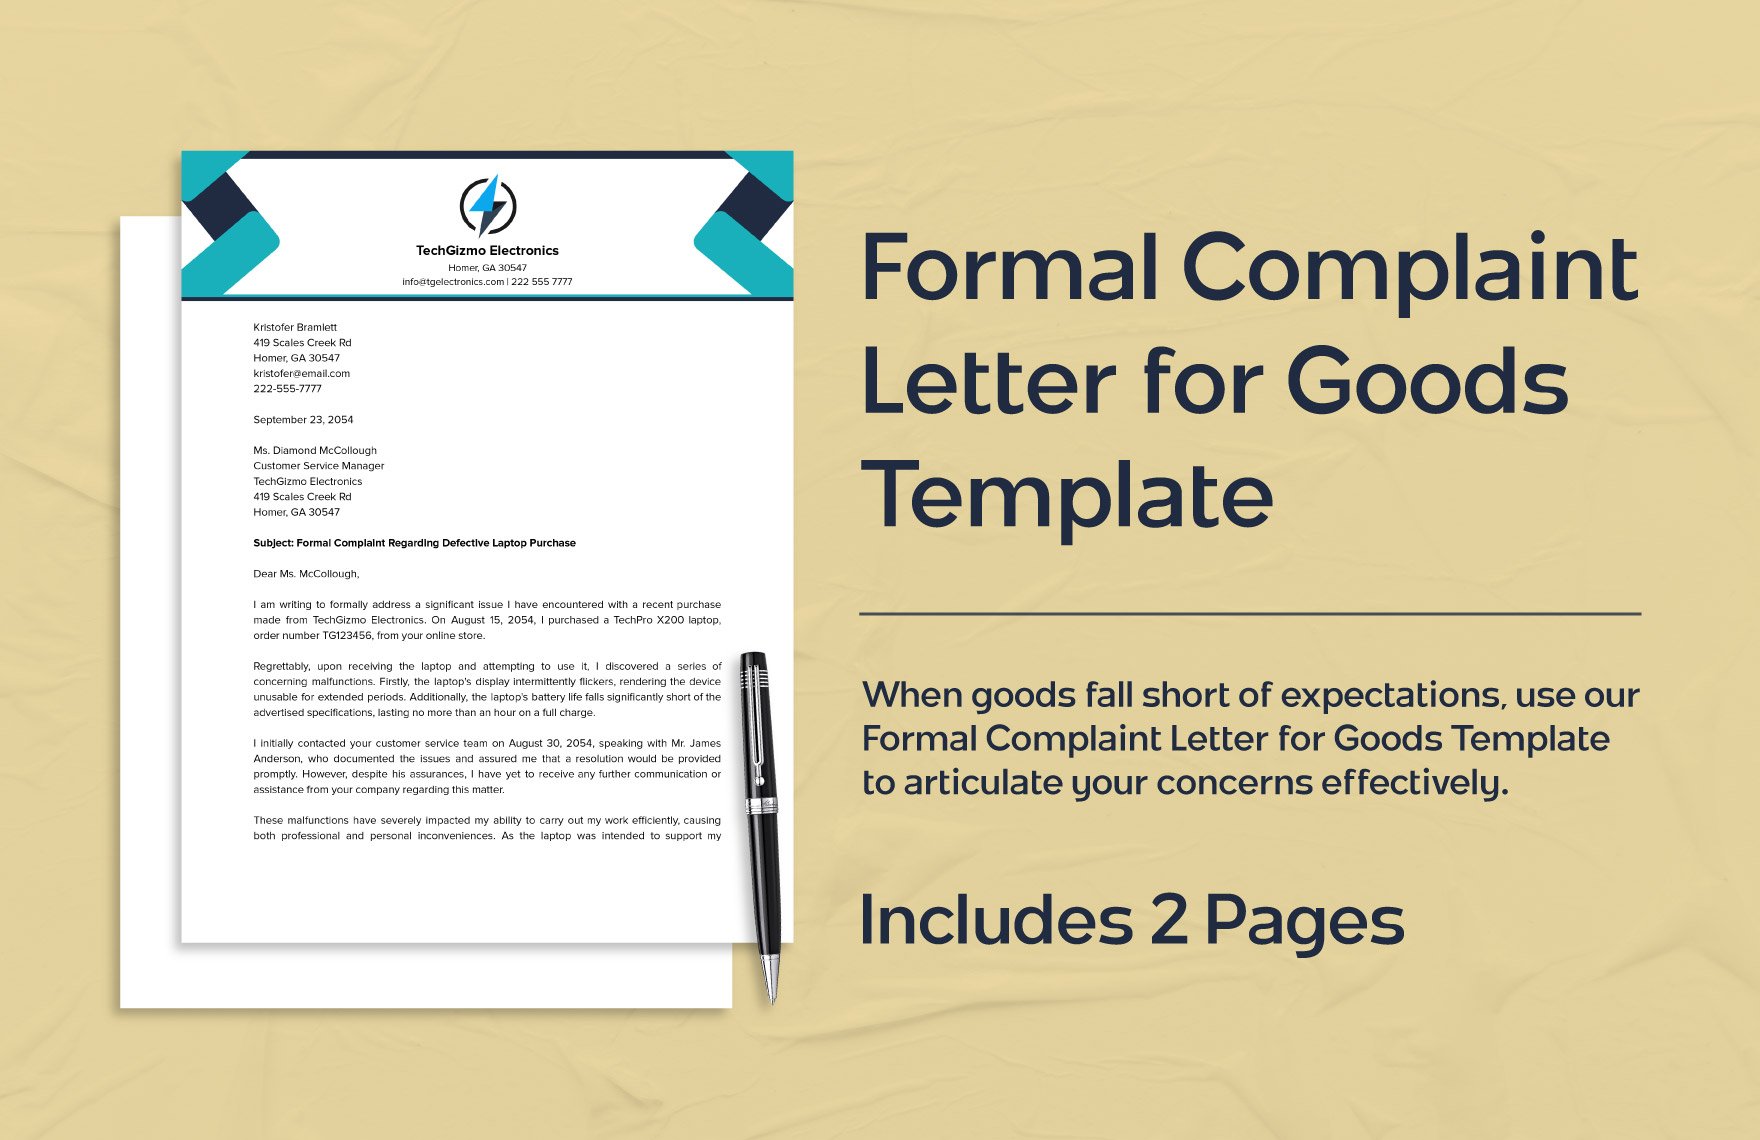 Formal Complaint Letter for Goods Template